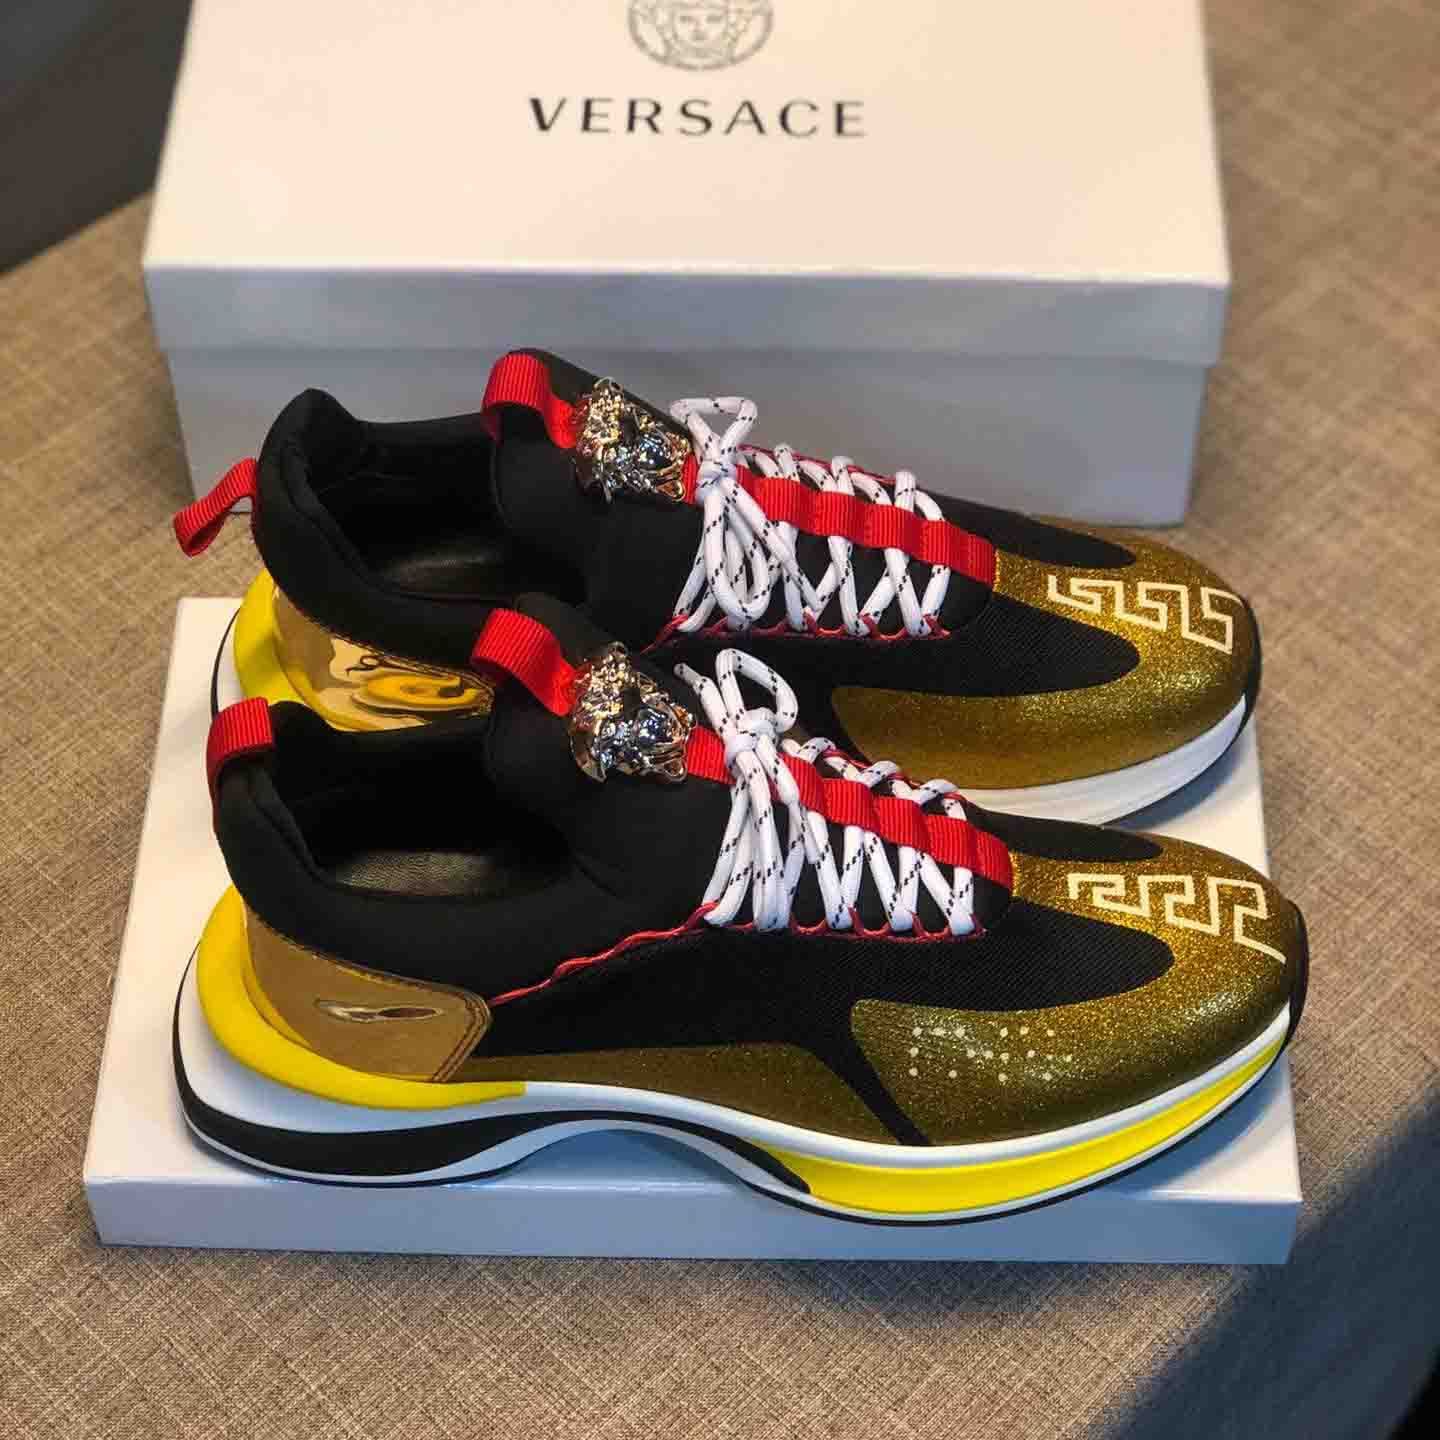 dhgate versace sneakers